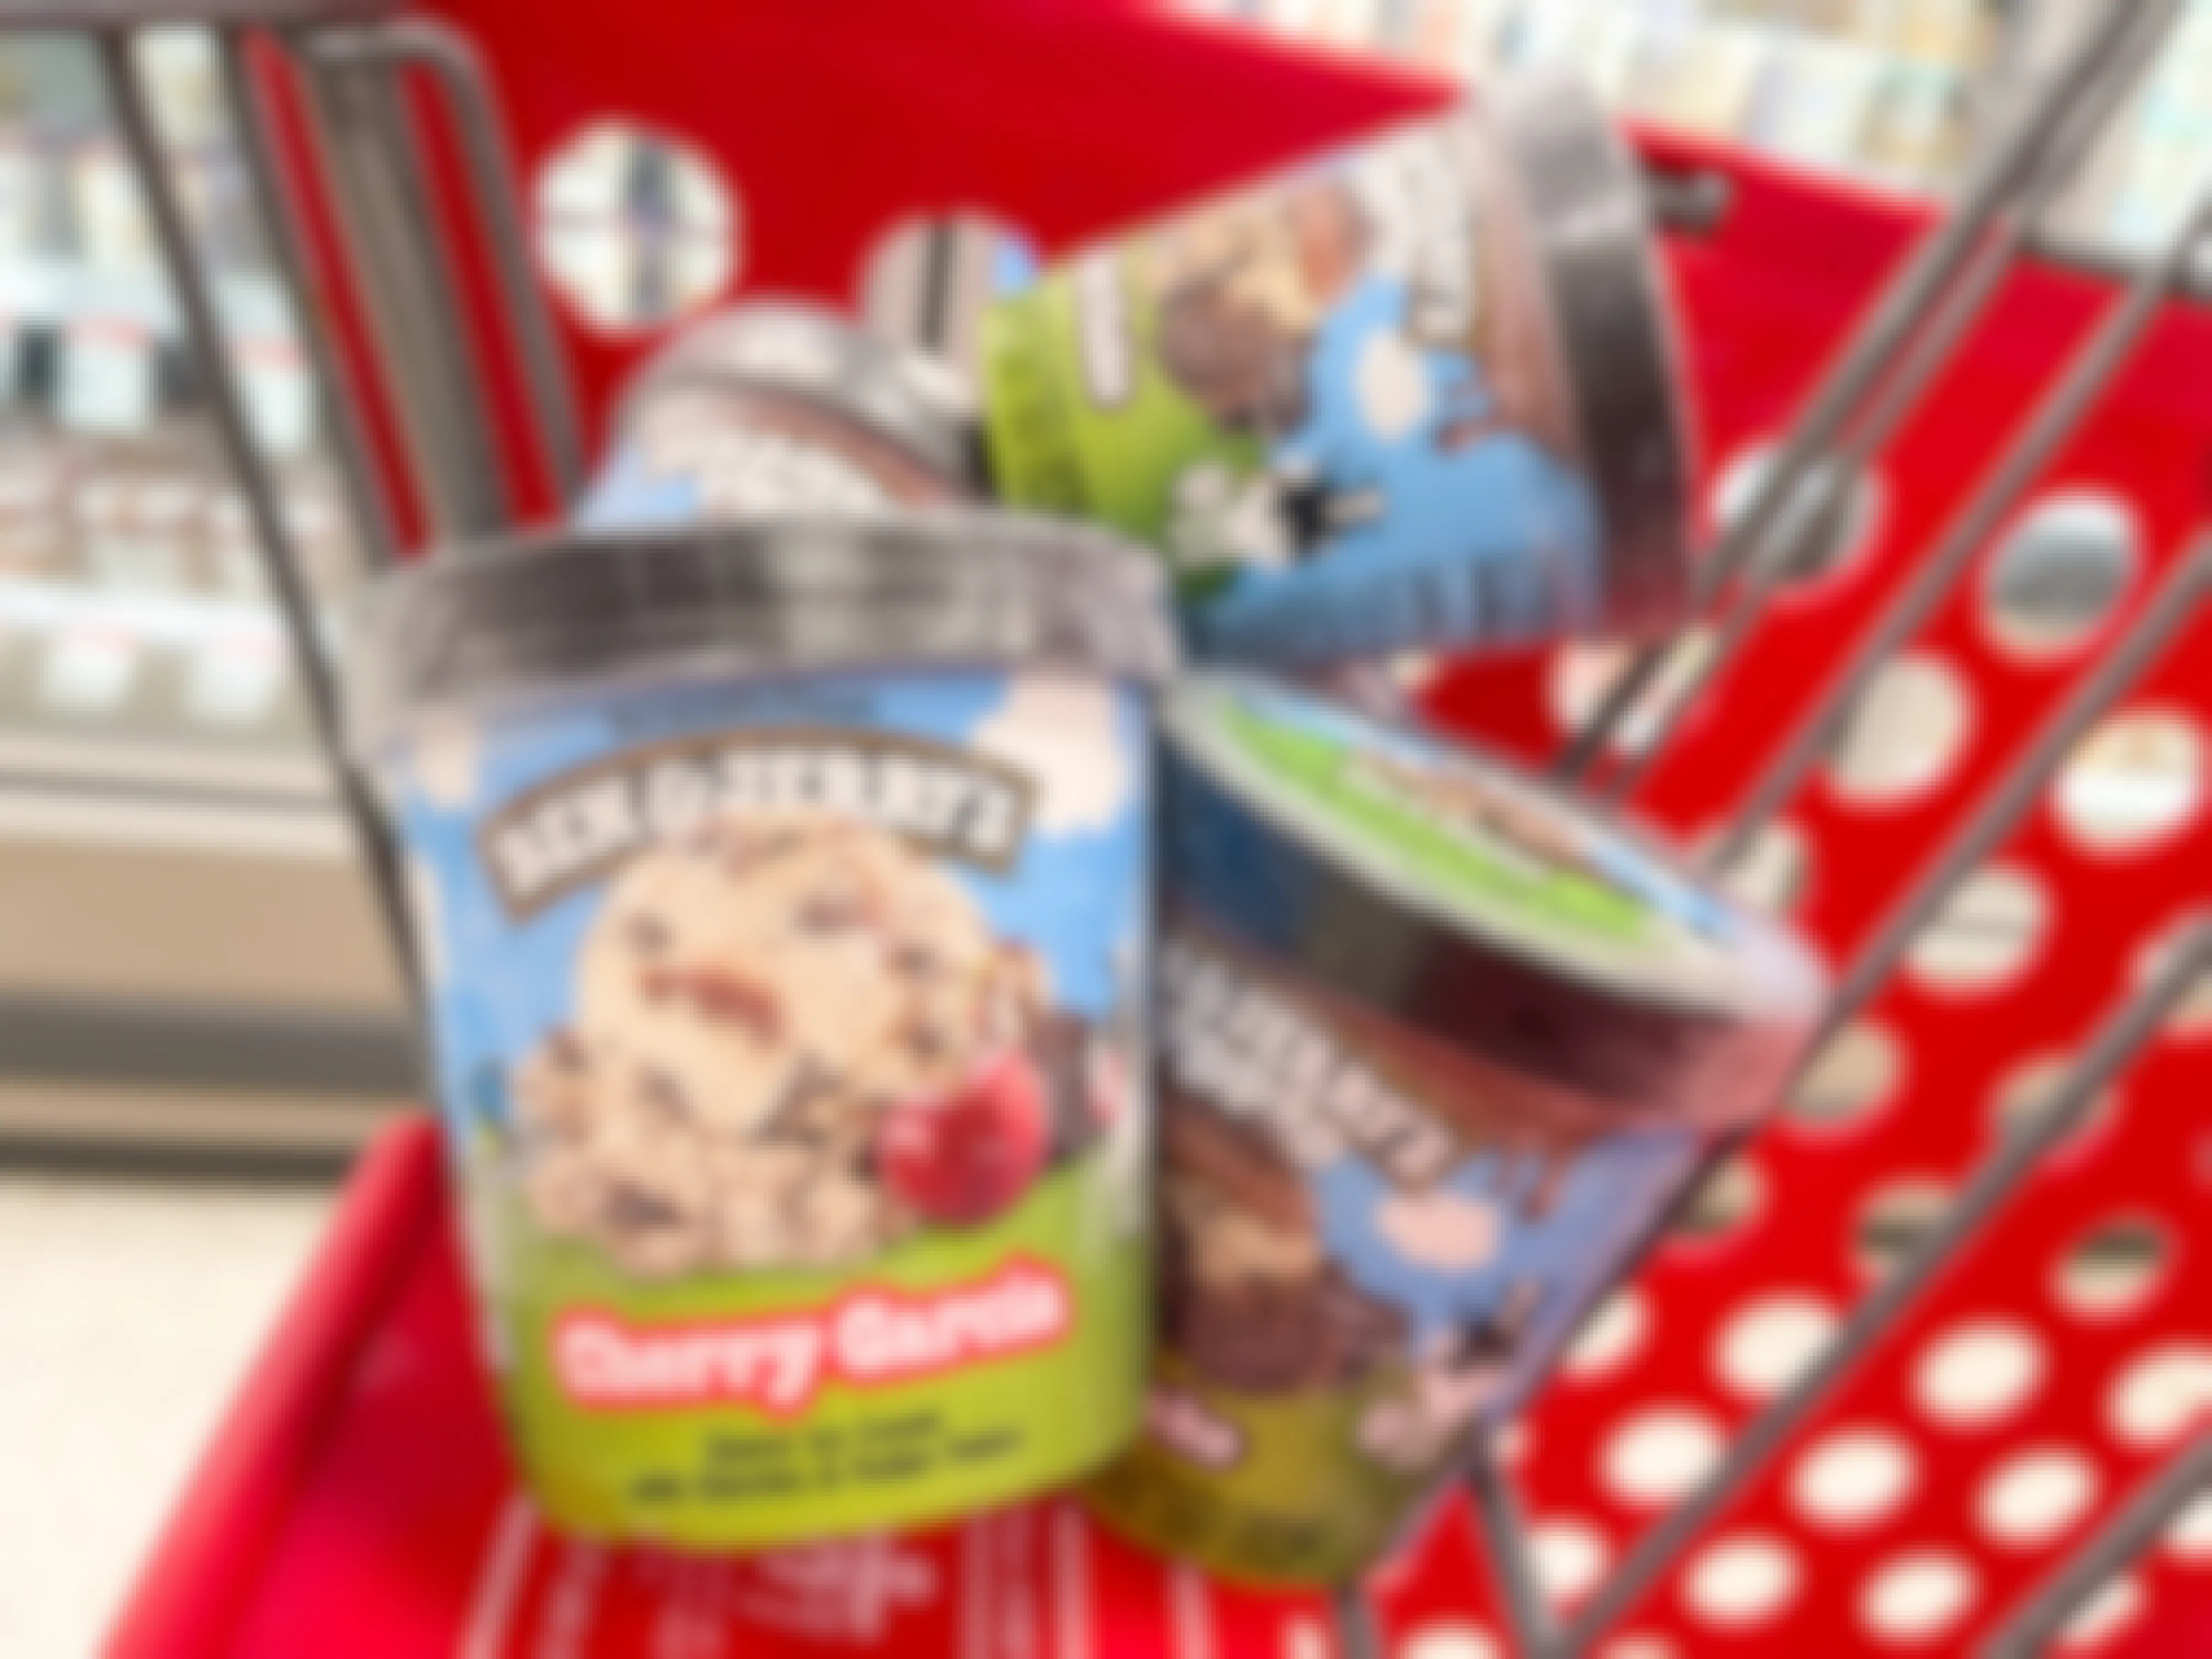 ben & jerrys ice cream in a target cart